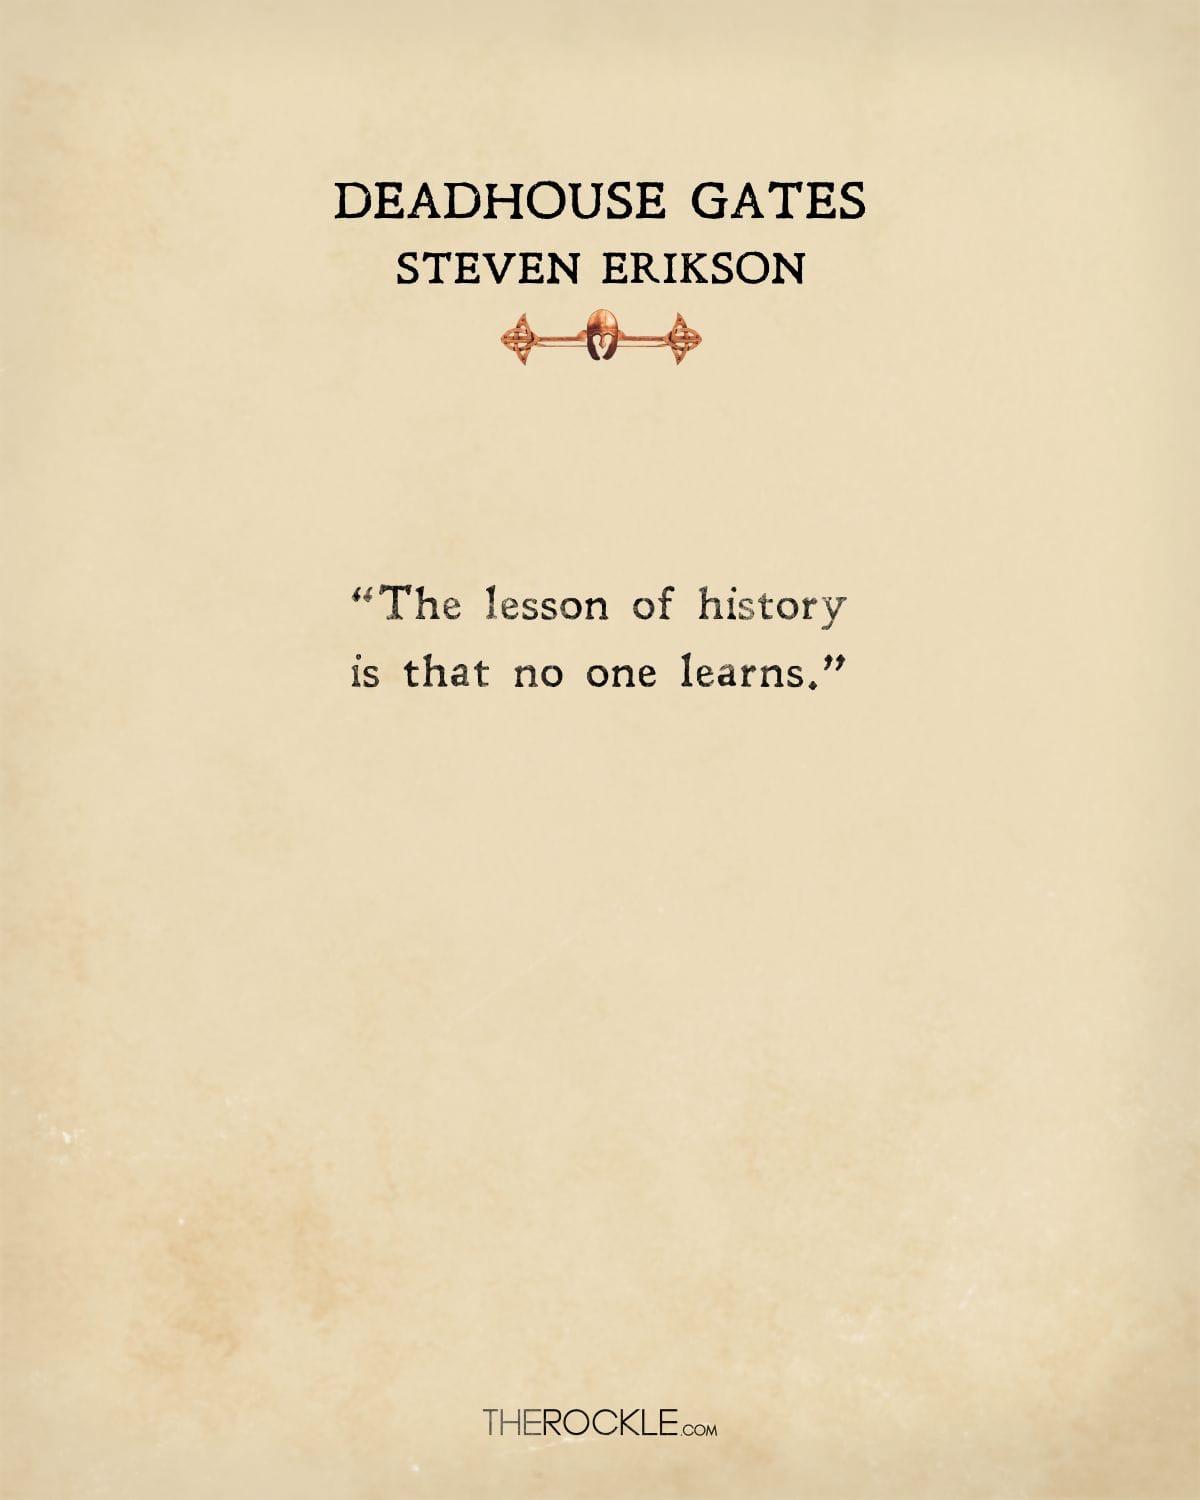 Deadhouse Gates book quote